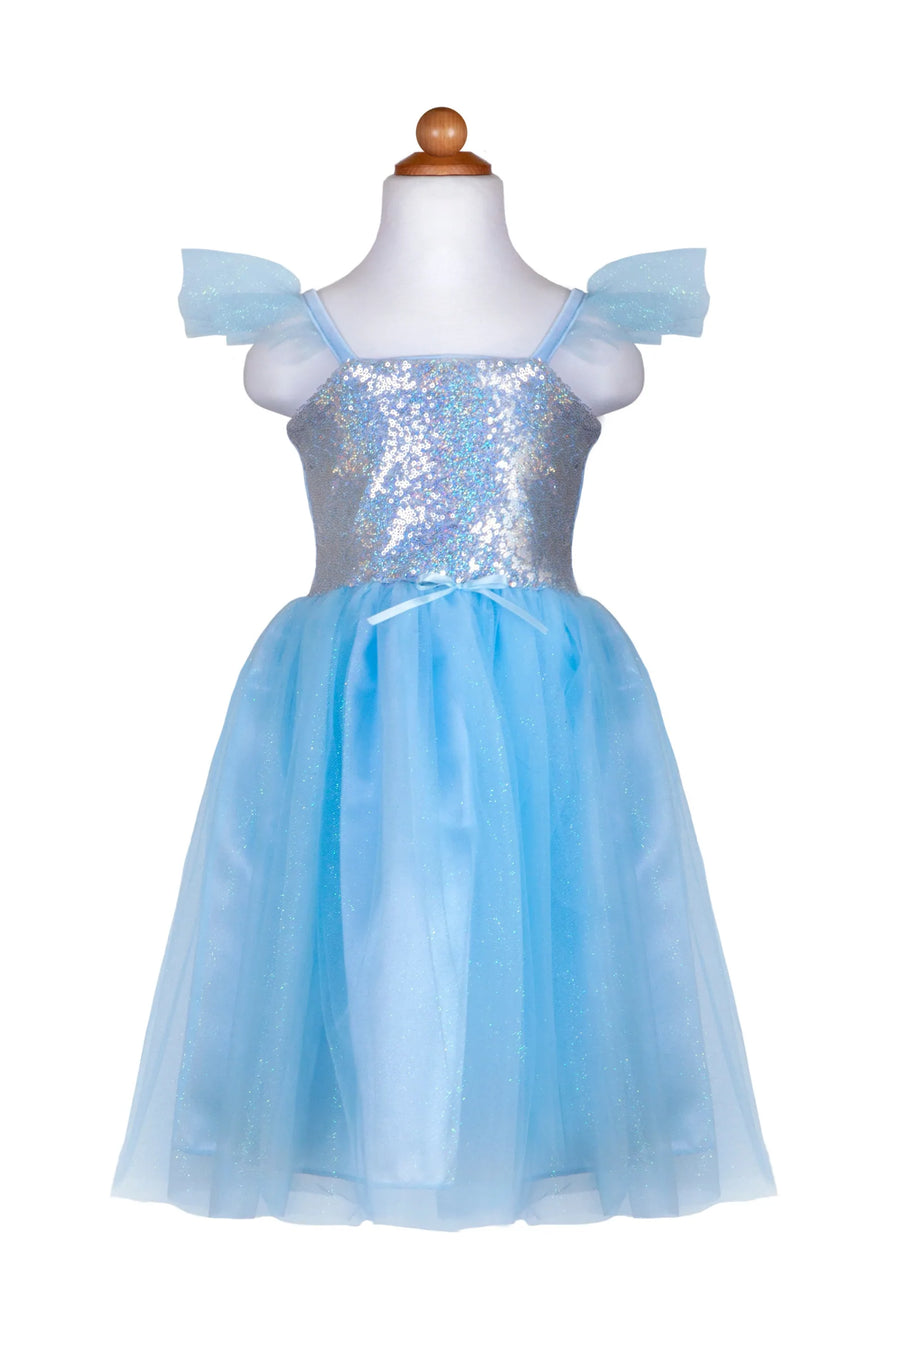 Great Pretenders Blue Sequins Princess Dress |Mockingbird Baby & Kids